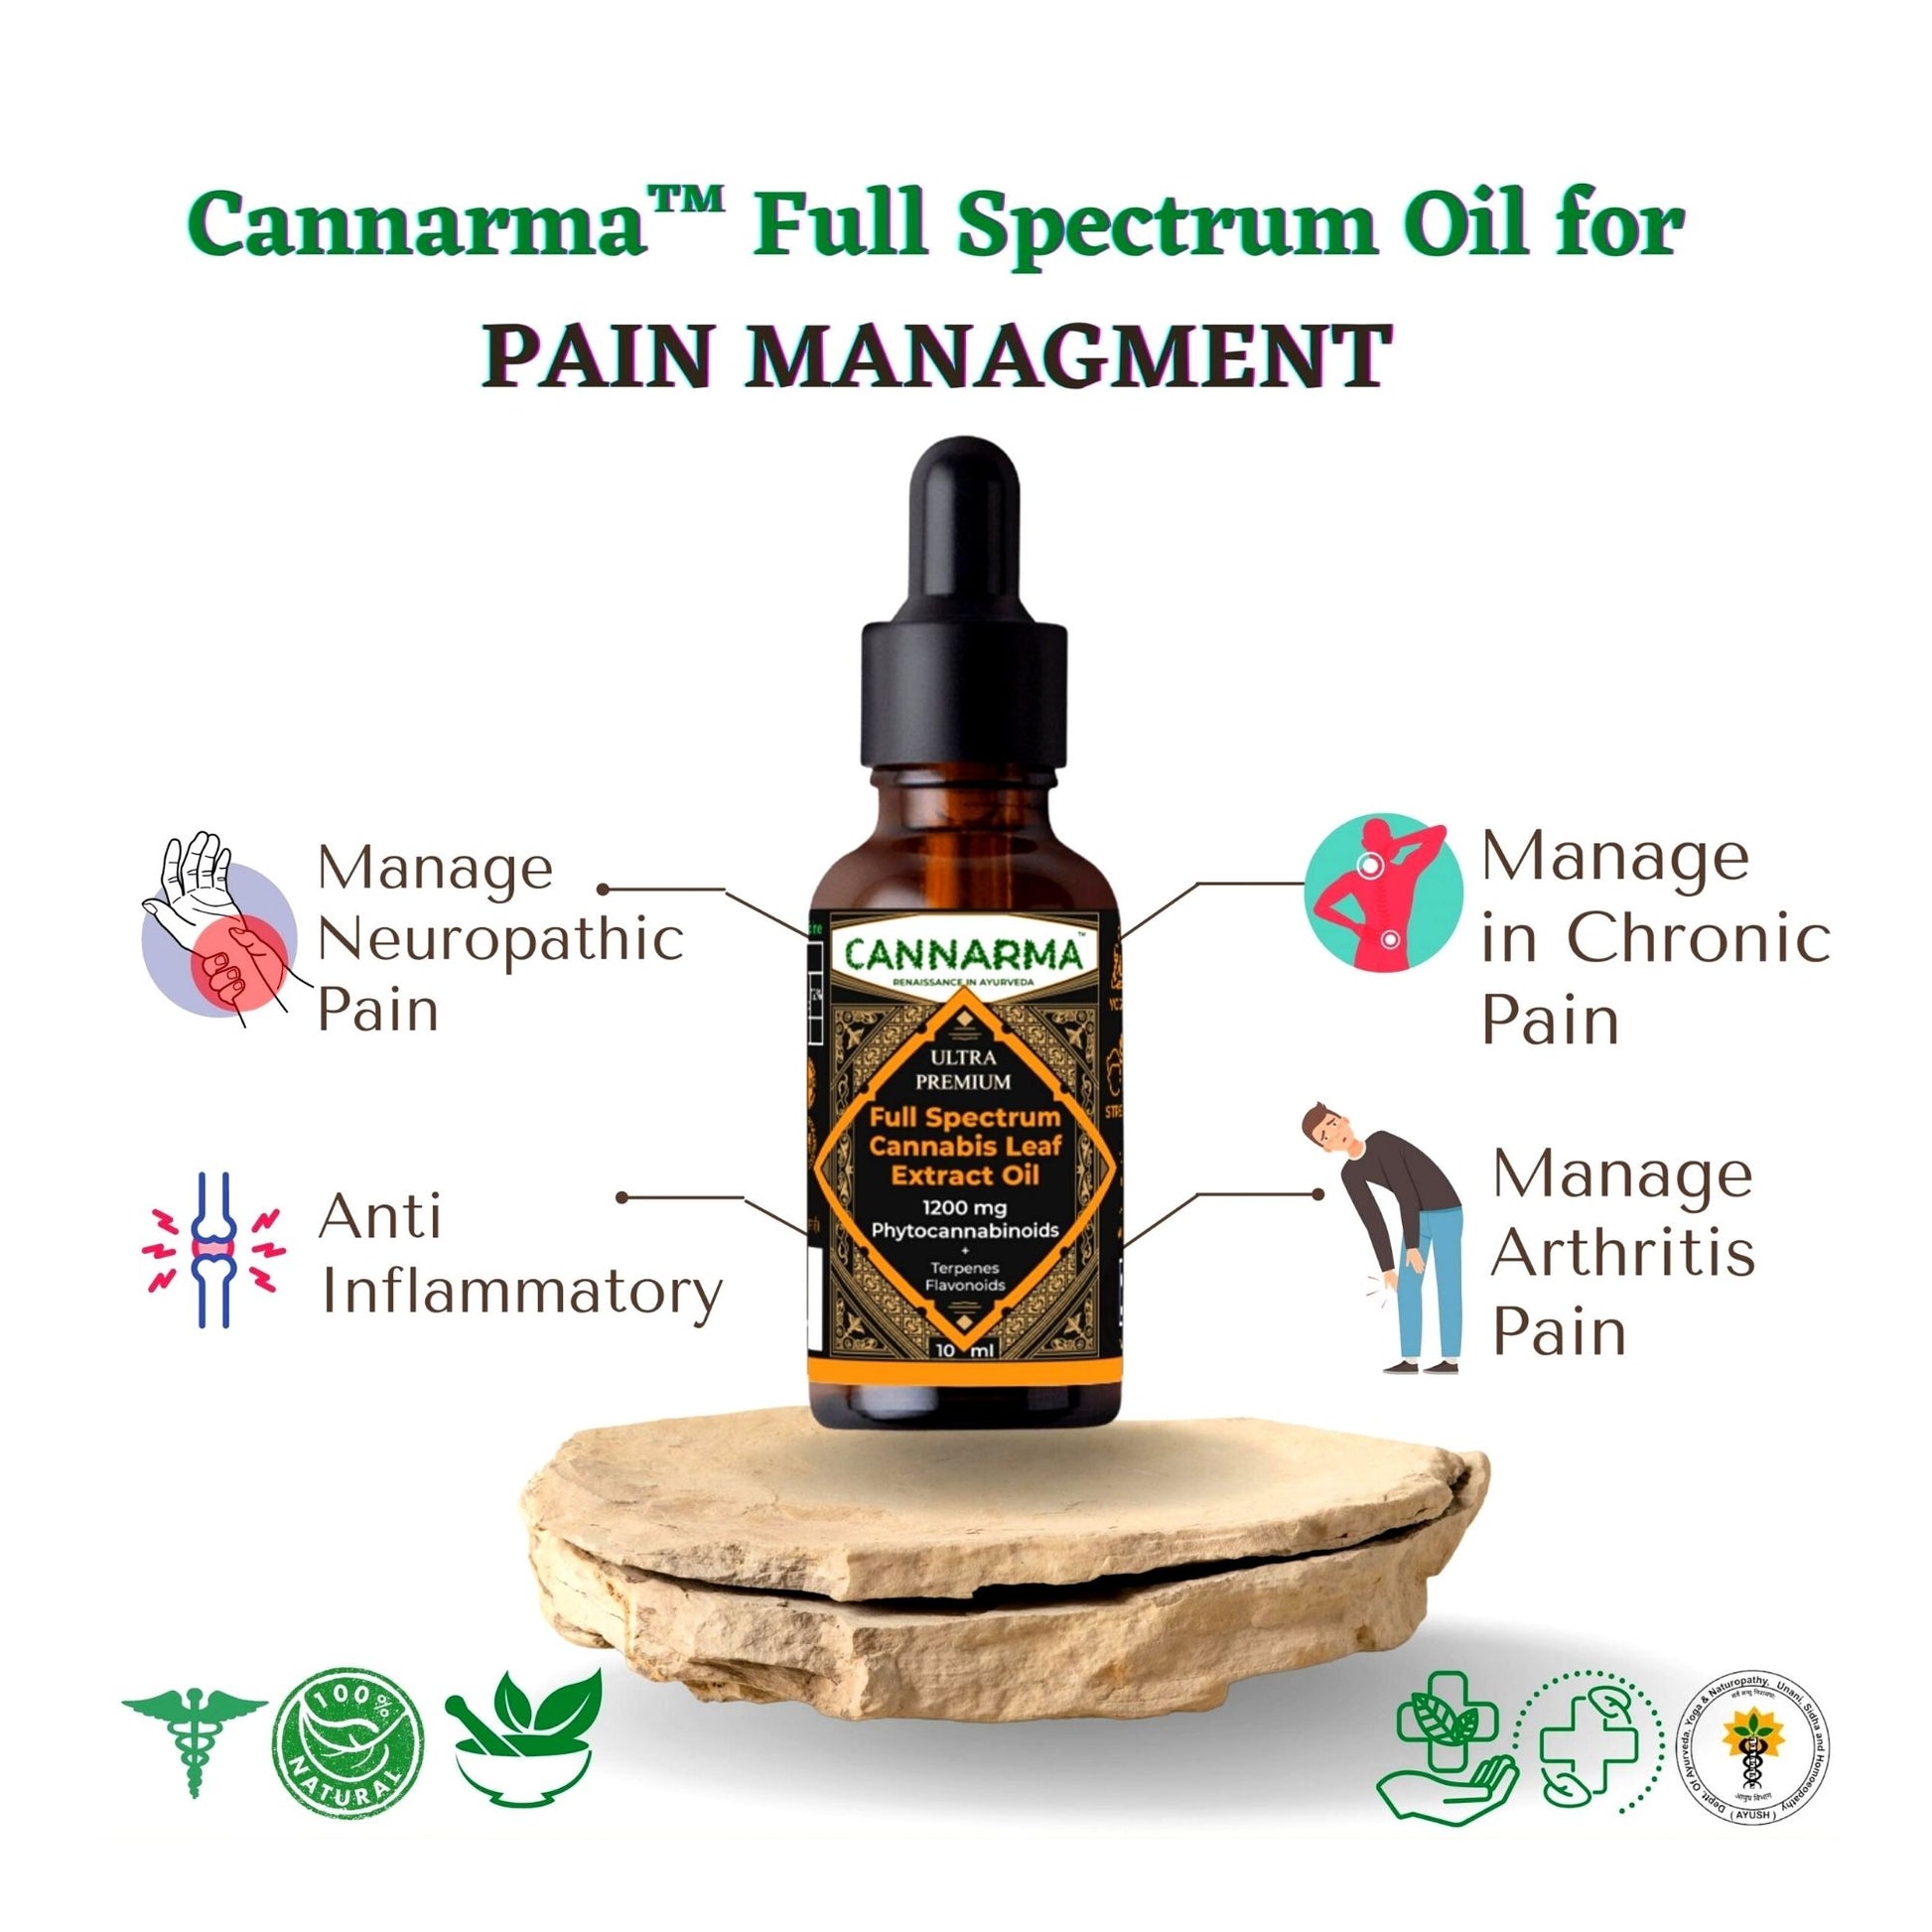 Buy Cannarma Full Spectrum Cannabis Oil 1200 mg online at Highjack India